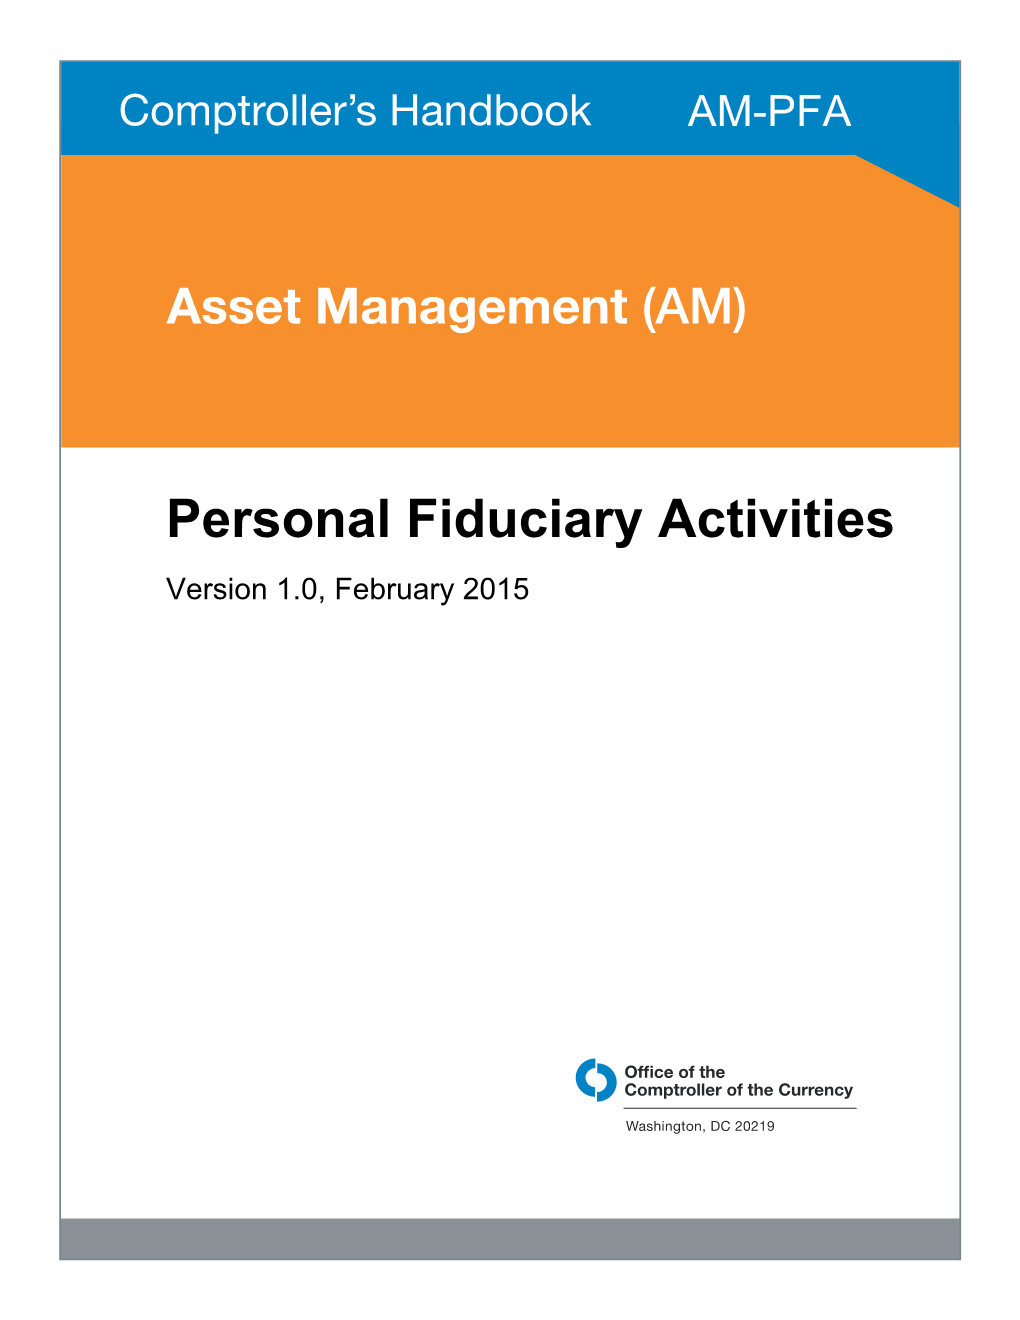 Personal Fiduciary Activities Handbook